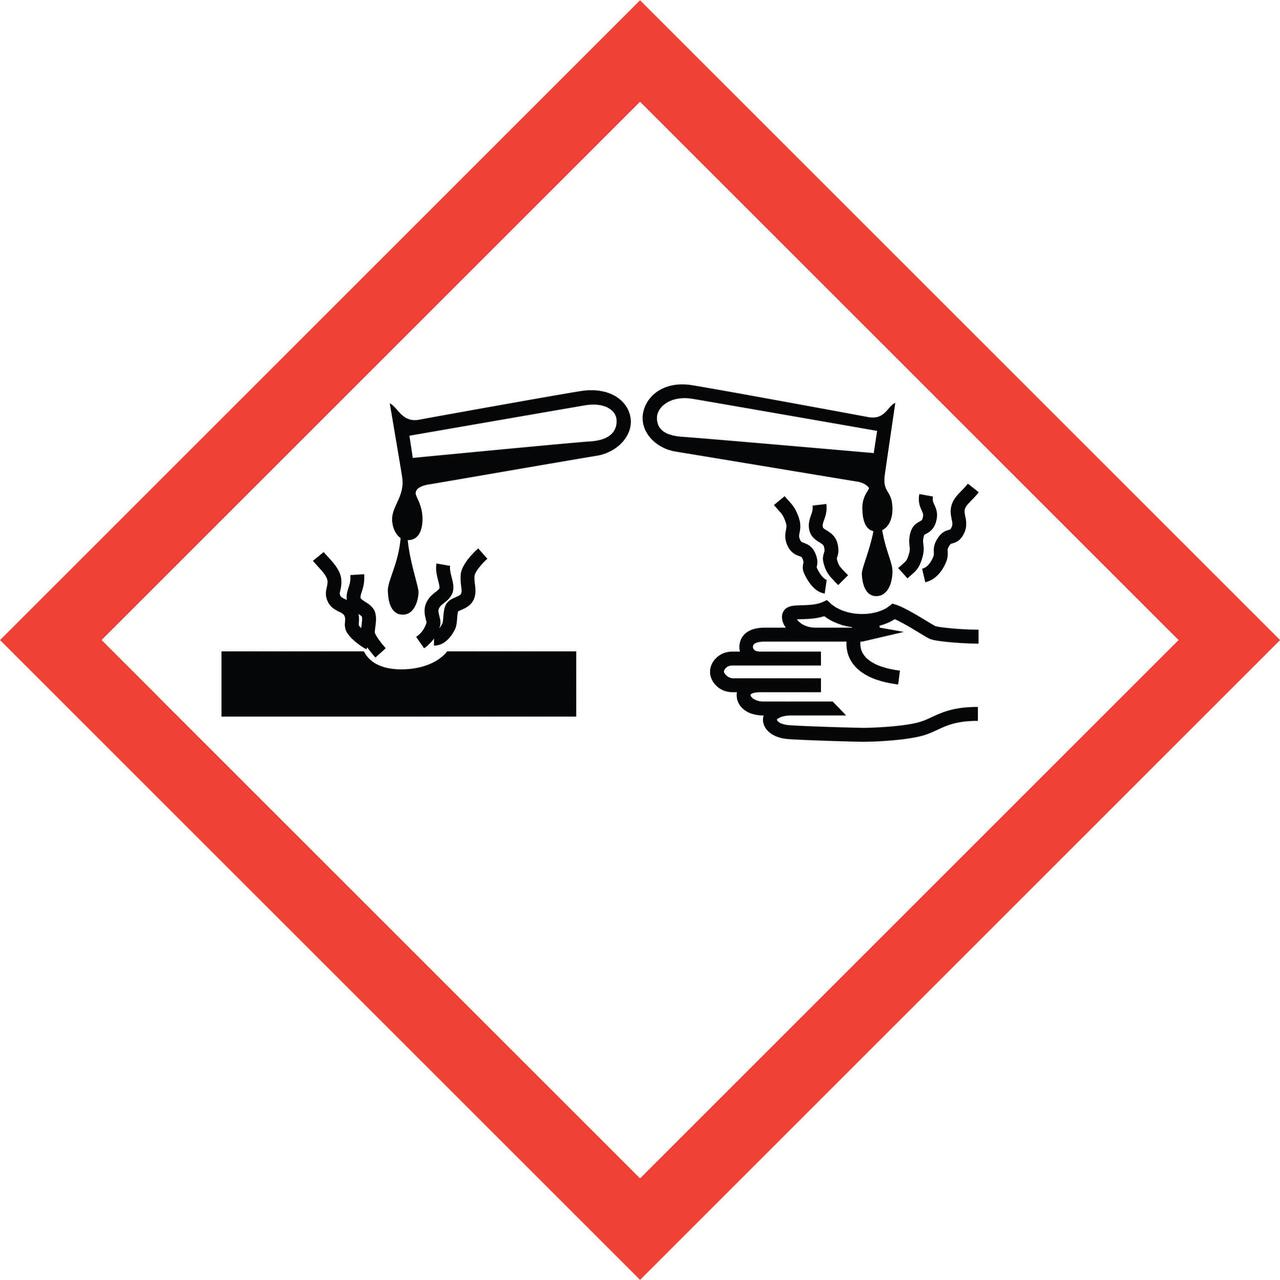 BELGRADE, SERBIA - MARCH 18, 2021: Vanish oxi action logo on a